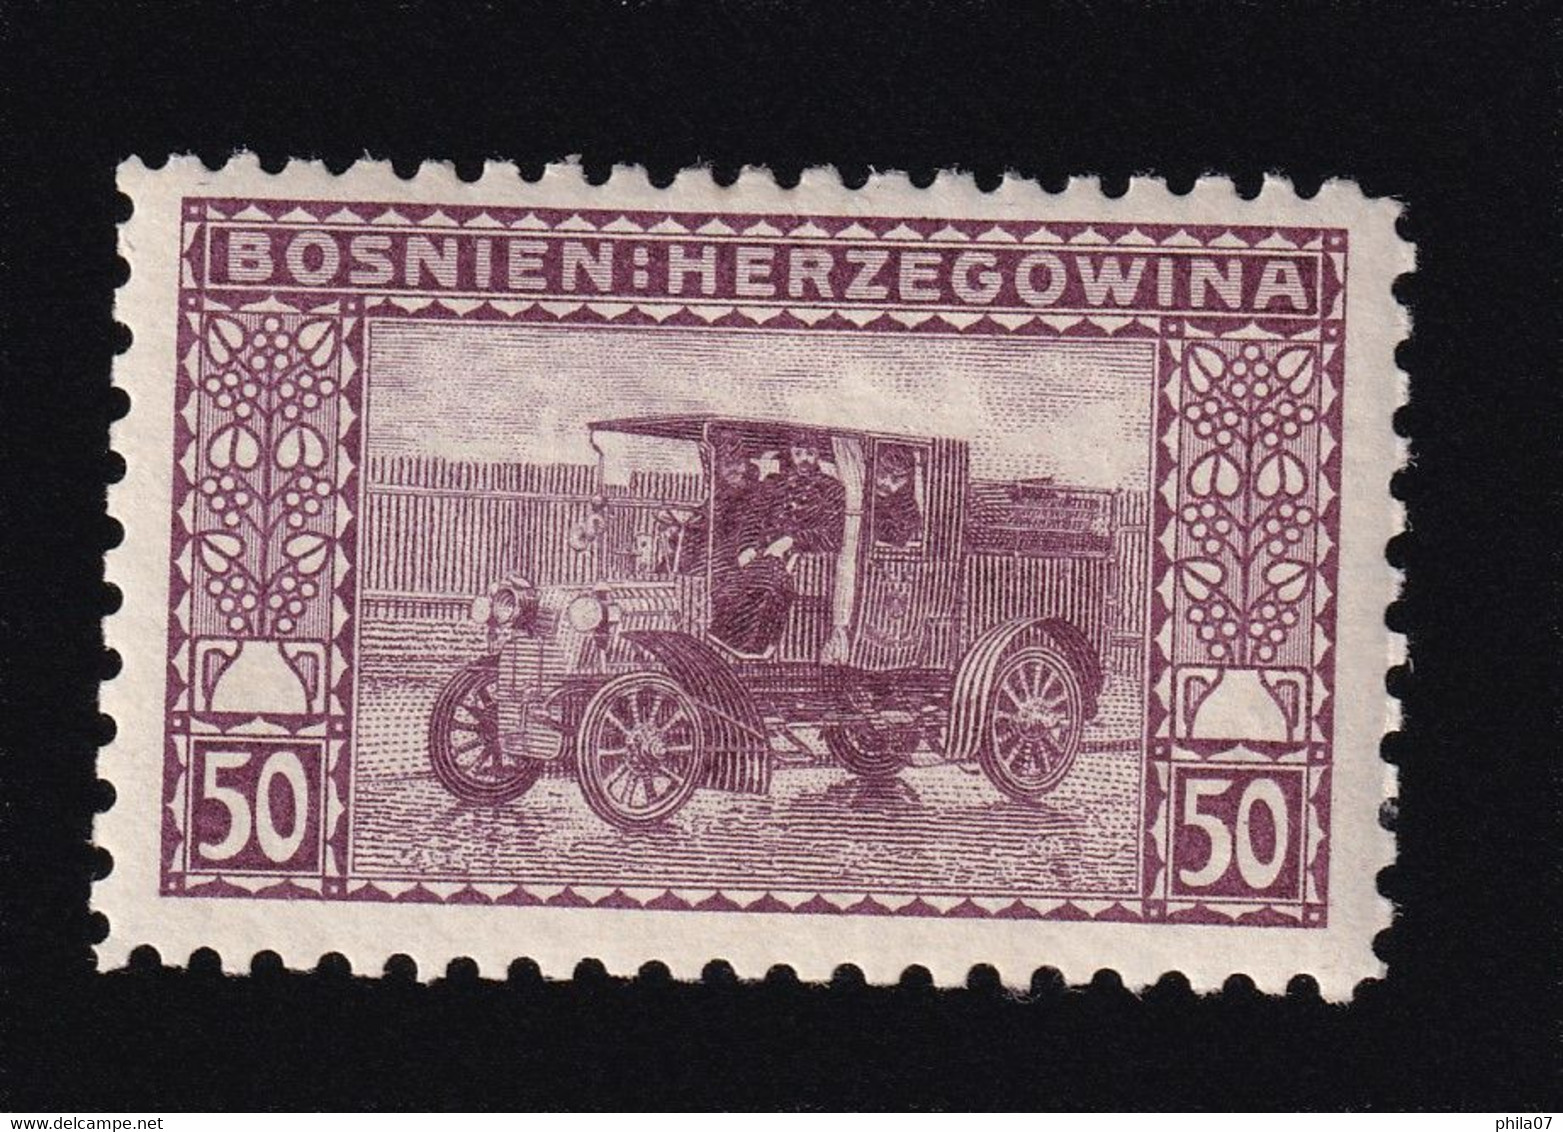 BOSNIA AND HERZEGOVINA - Landscape Stamp 50 Hellera, Perforation 9 ½, MNH - Bosnia And Herzegovina